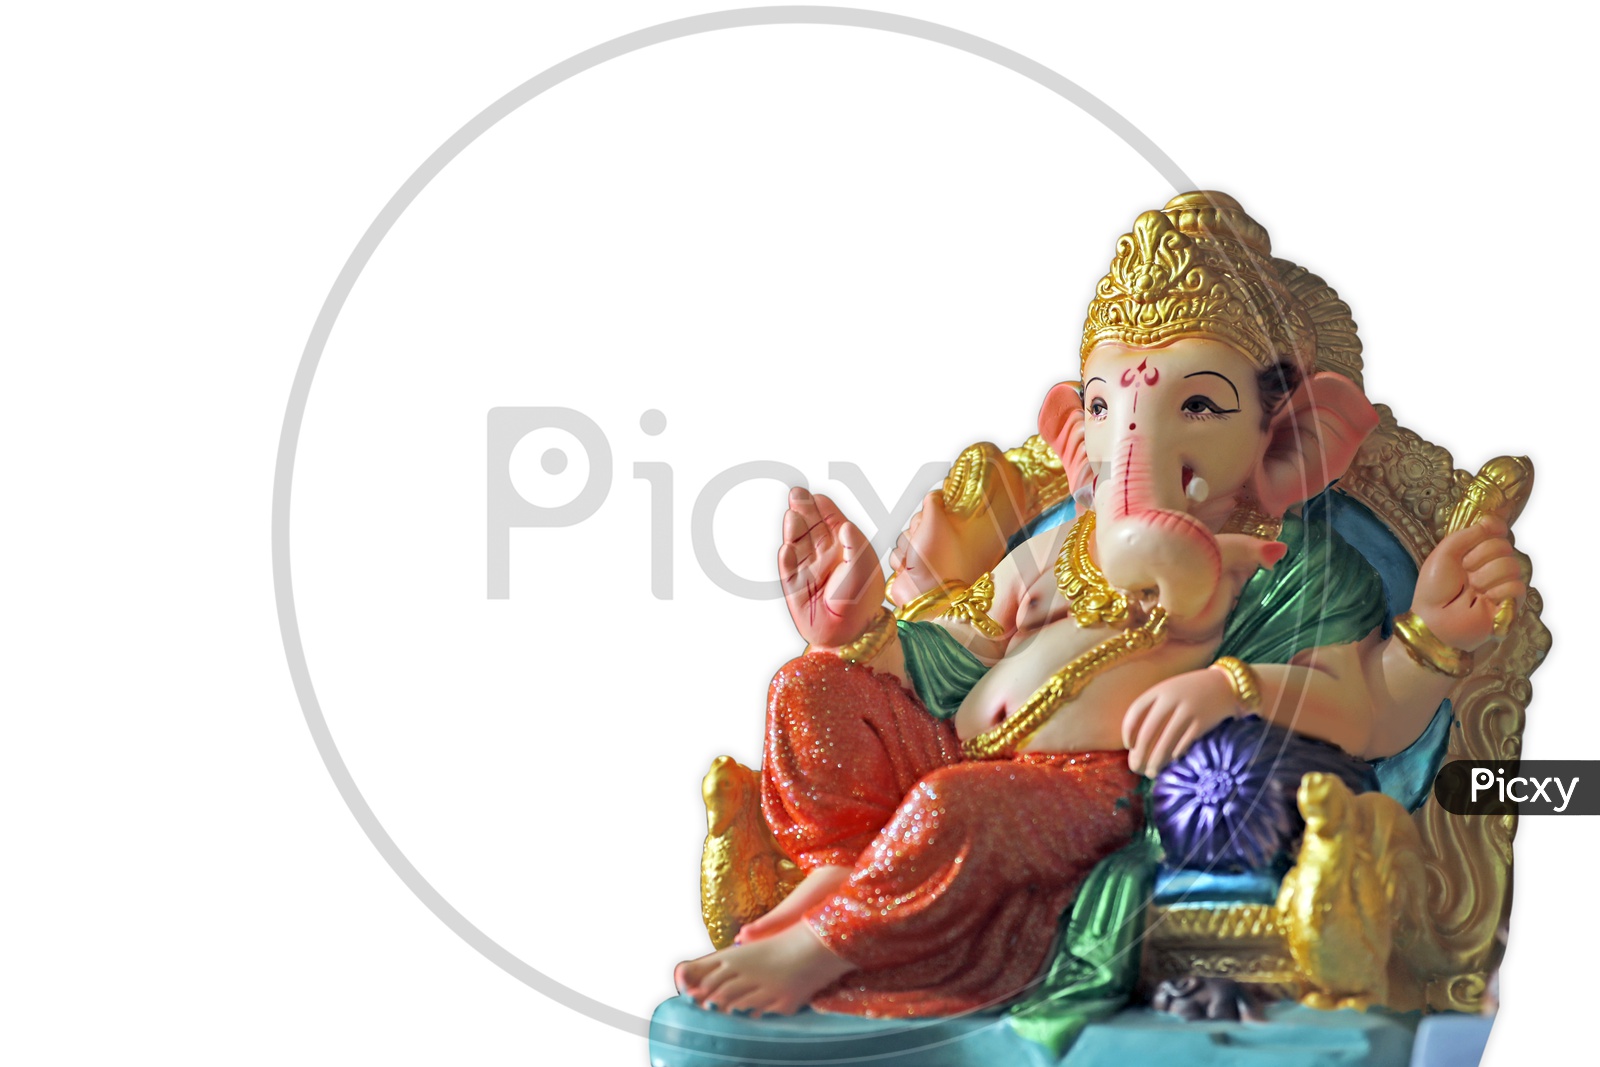 Lord Ganesh Idol / Ganesha Idol with white background